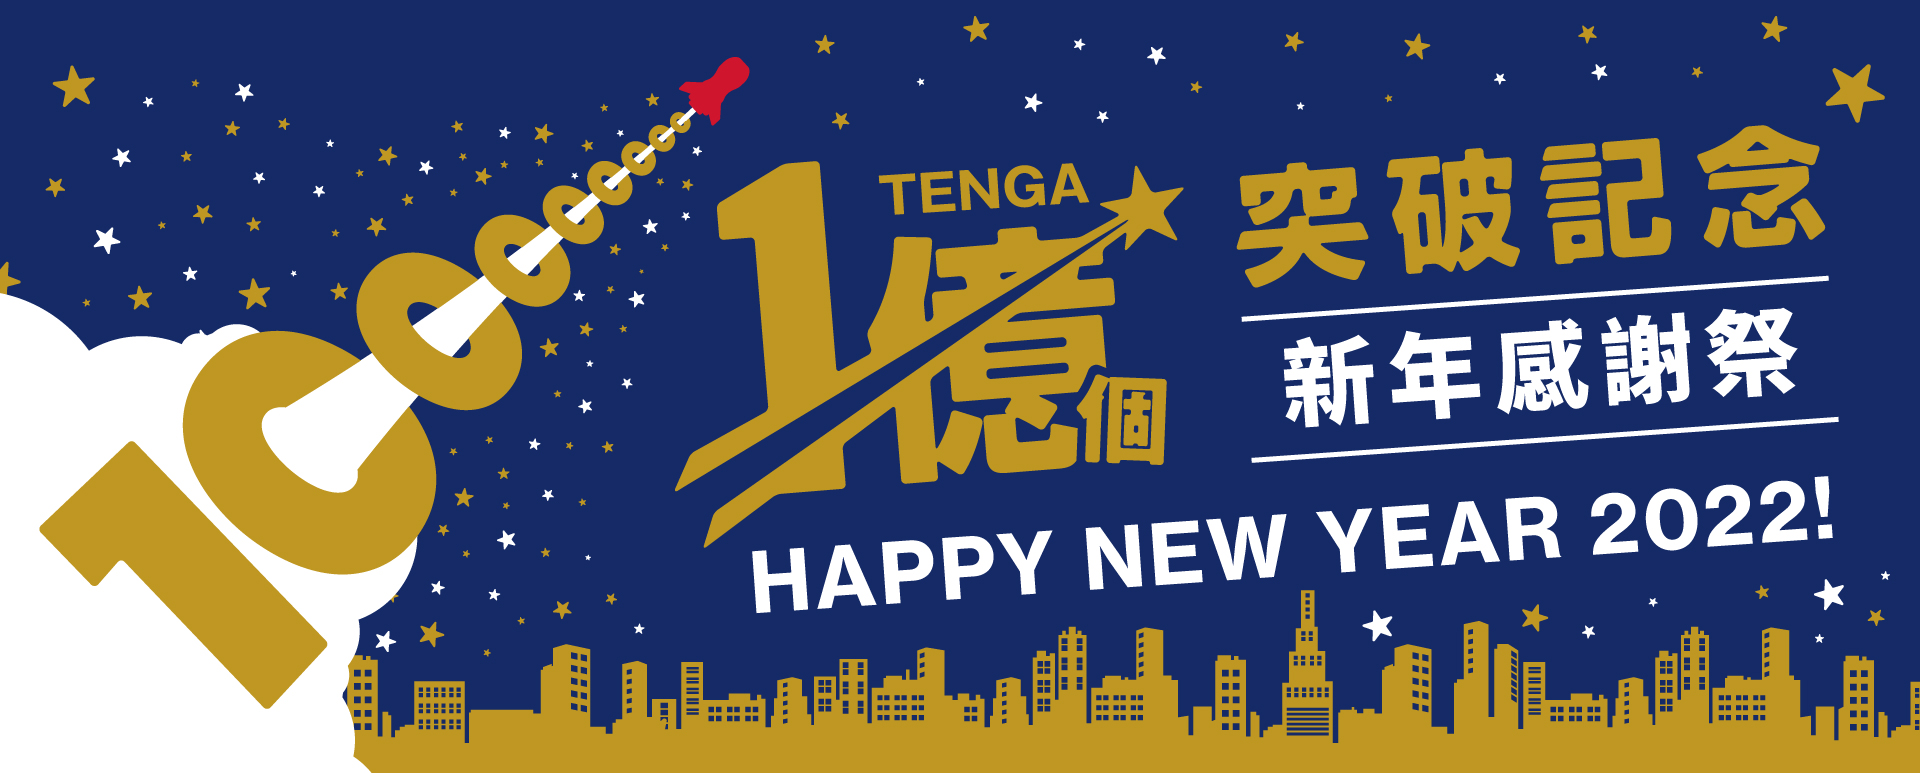 TENGA推出新年感謝祭三重優惠活動，不僅發售限量雙新品「1億個TENGA突破紀念套裝」及「和風典雅 賀歲禮盒2022」回饋消費者支持，同時，為了讓大家回顧2021熱賣商品的迷人秘密，還推出熱門銷售TOP 10商品的獨家九折優惠，超強限量新品加上專屬優惠，新的一年就由TENGA陪伴度過！